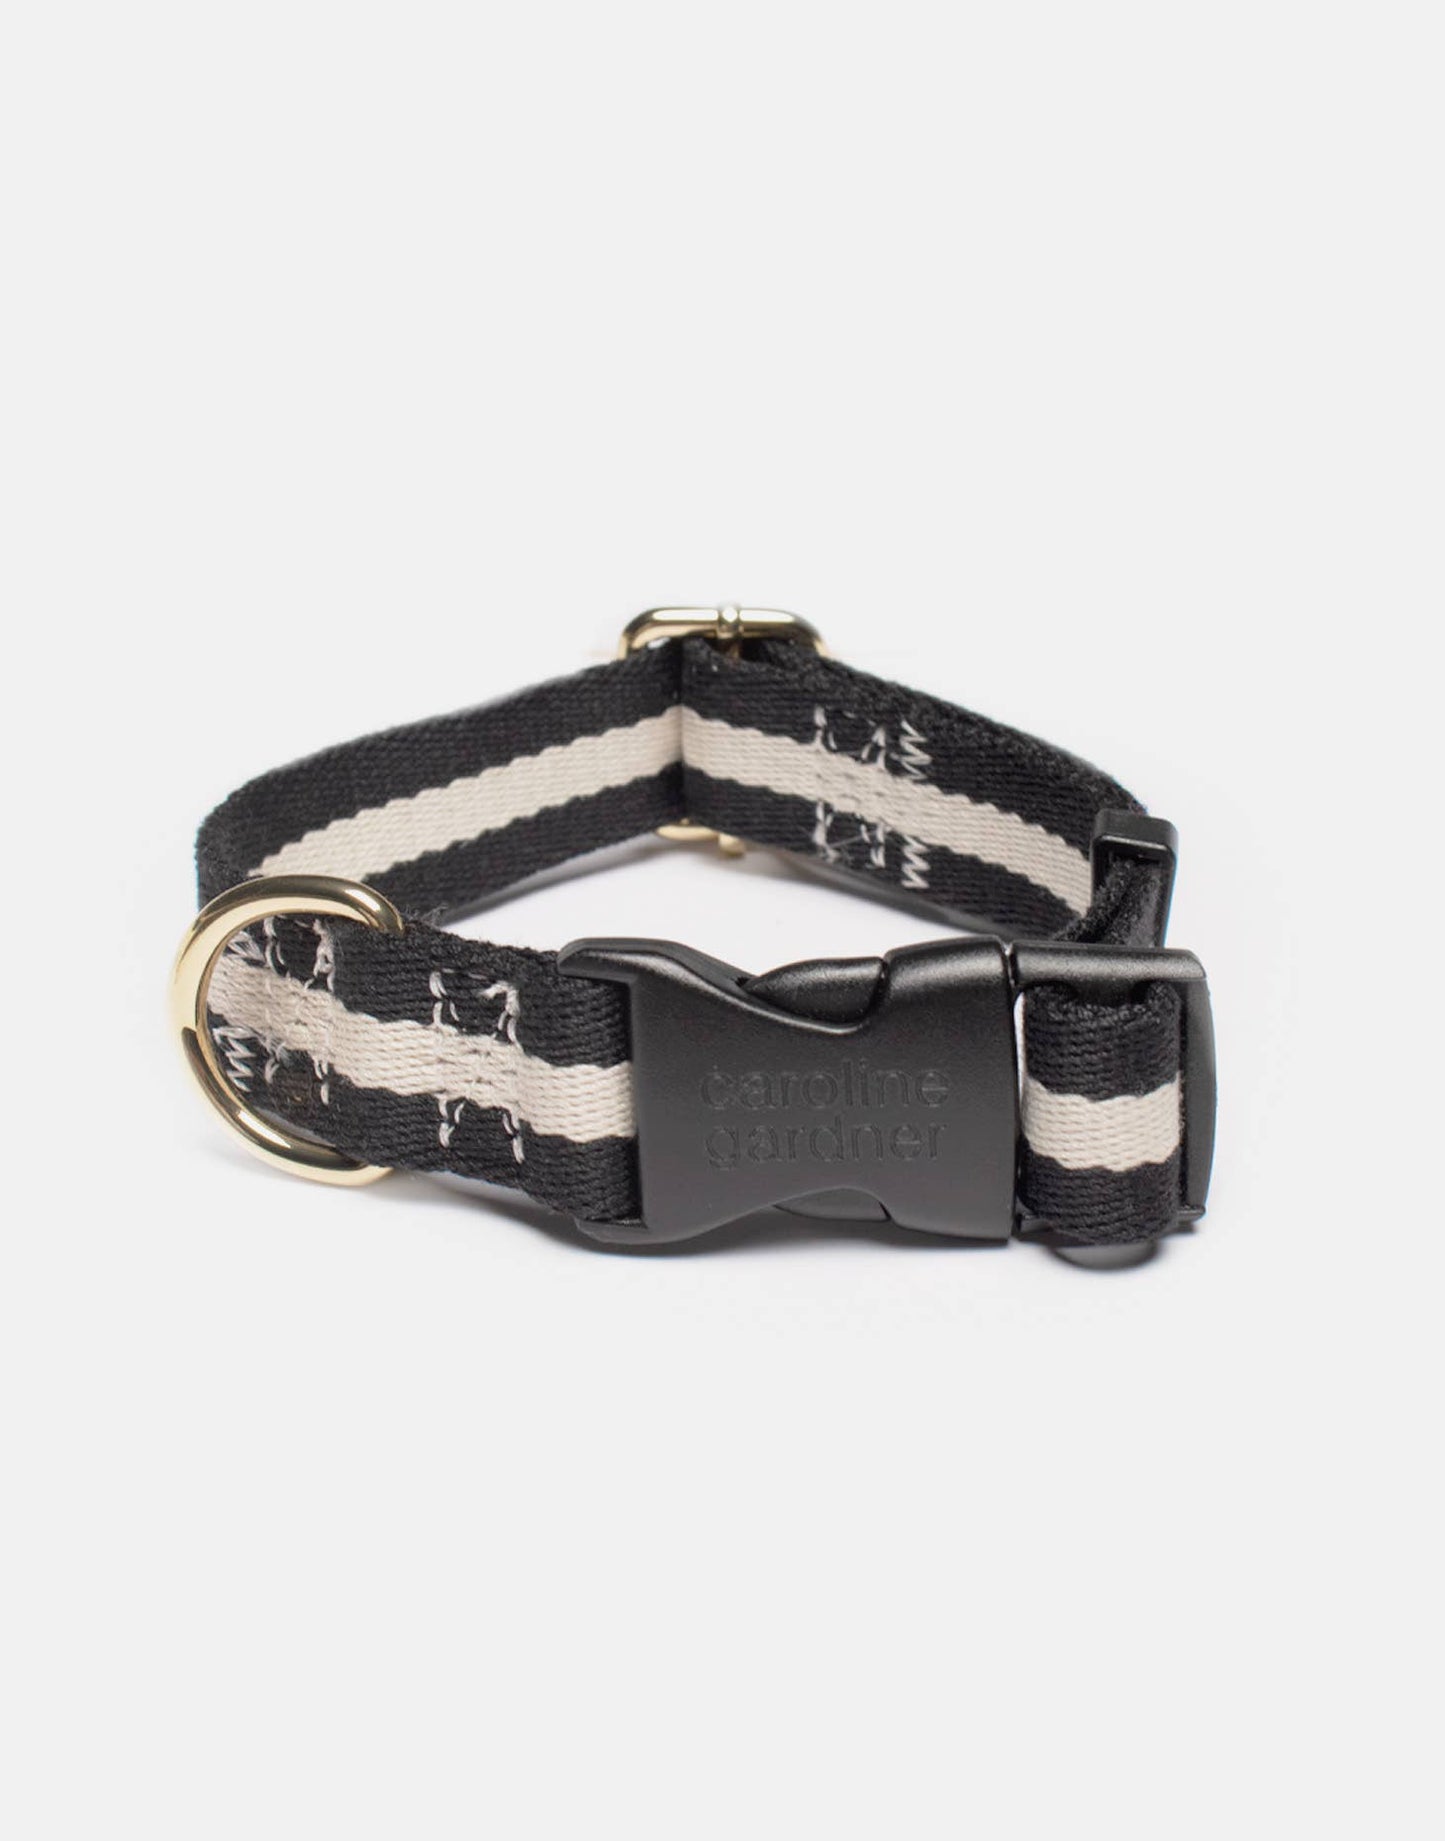 Black/White Monochrome Dog Collar